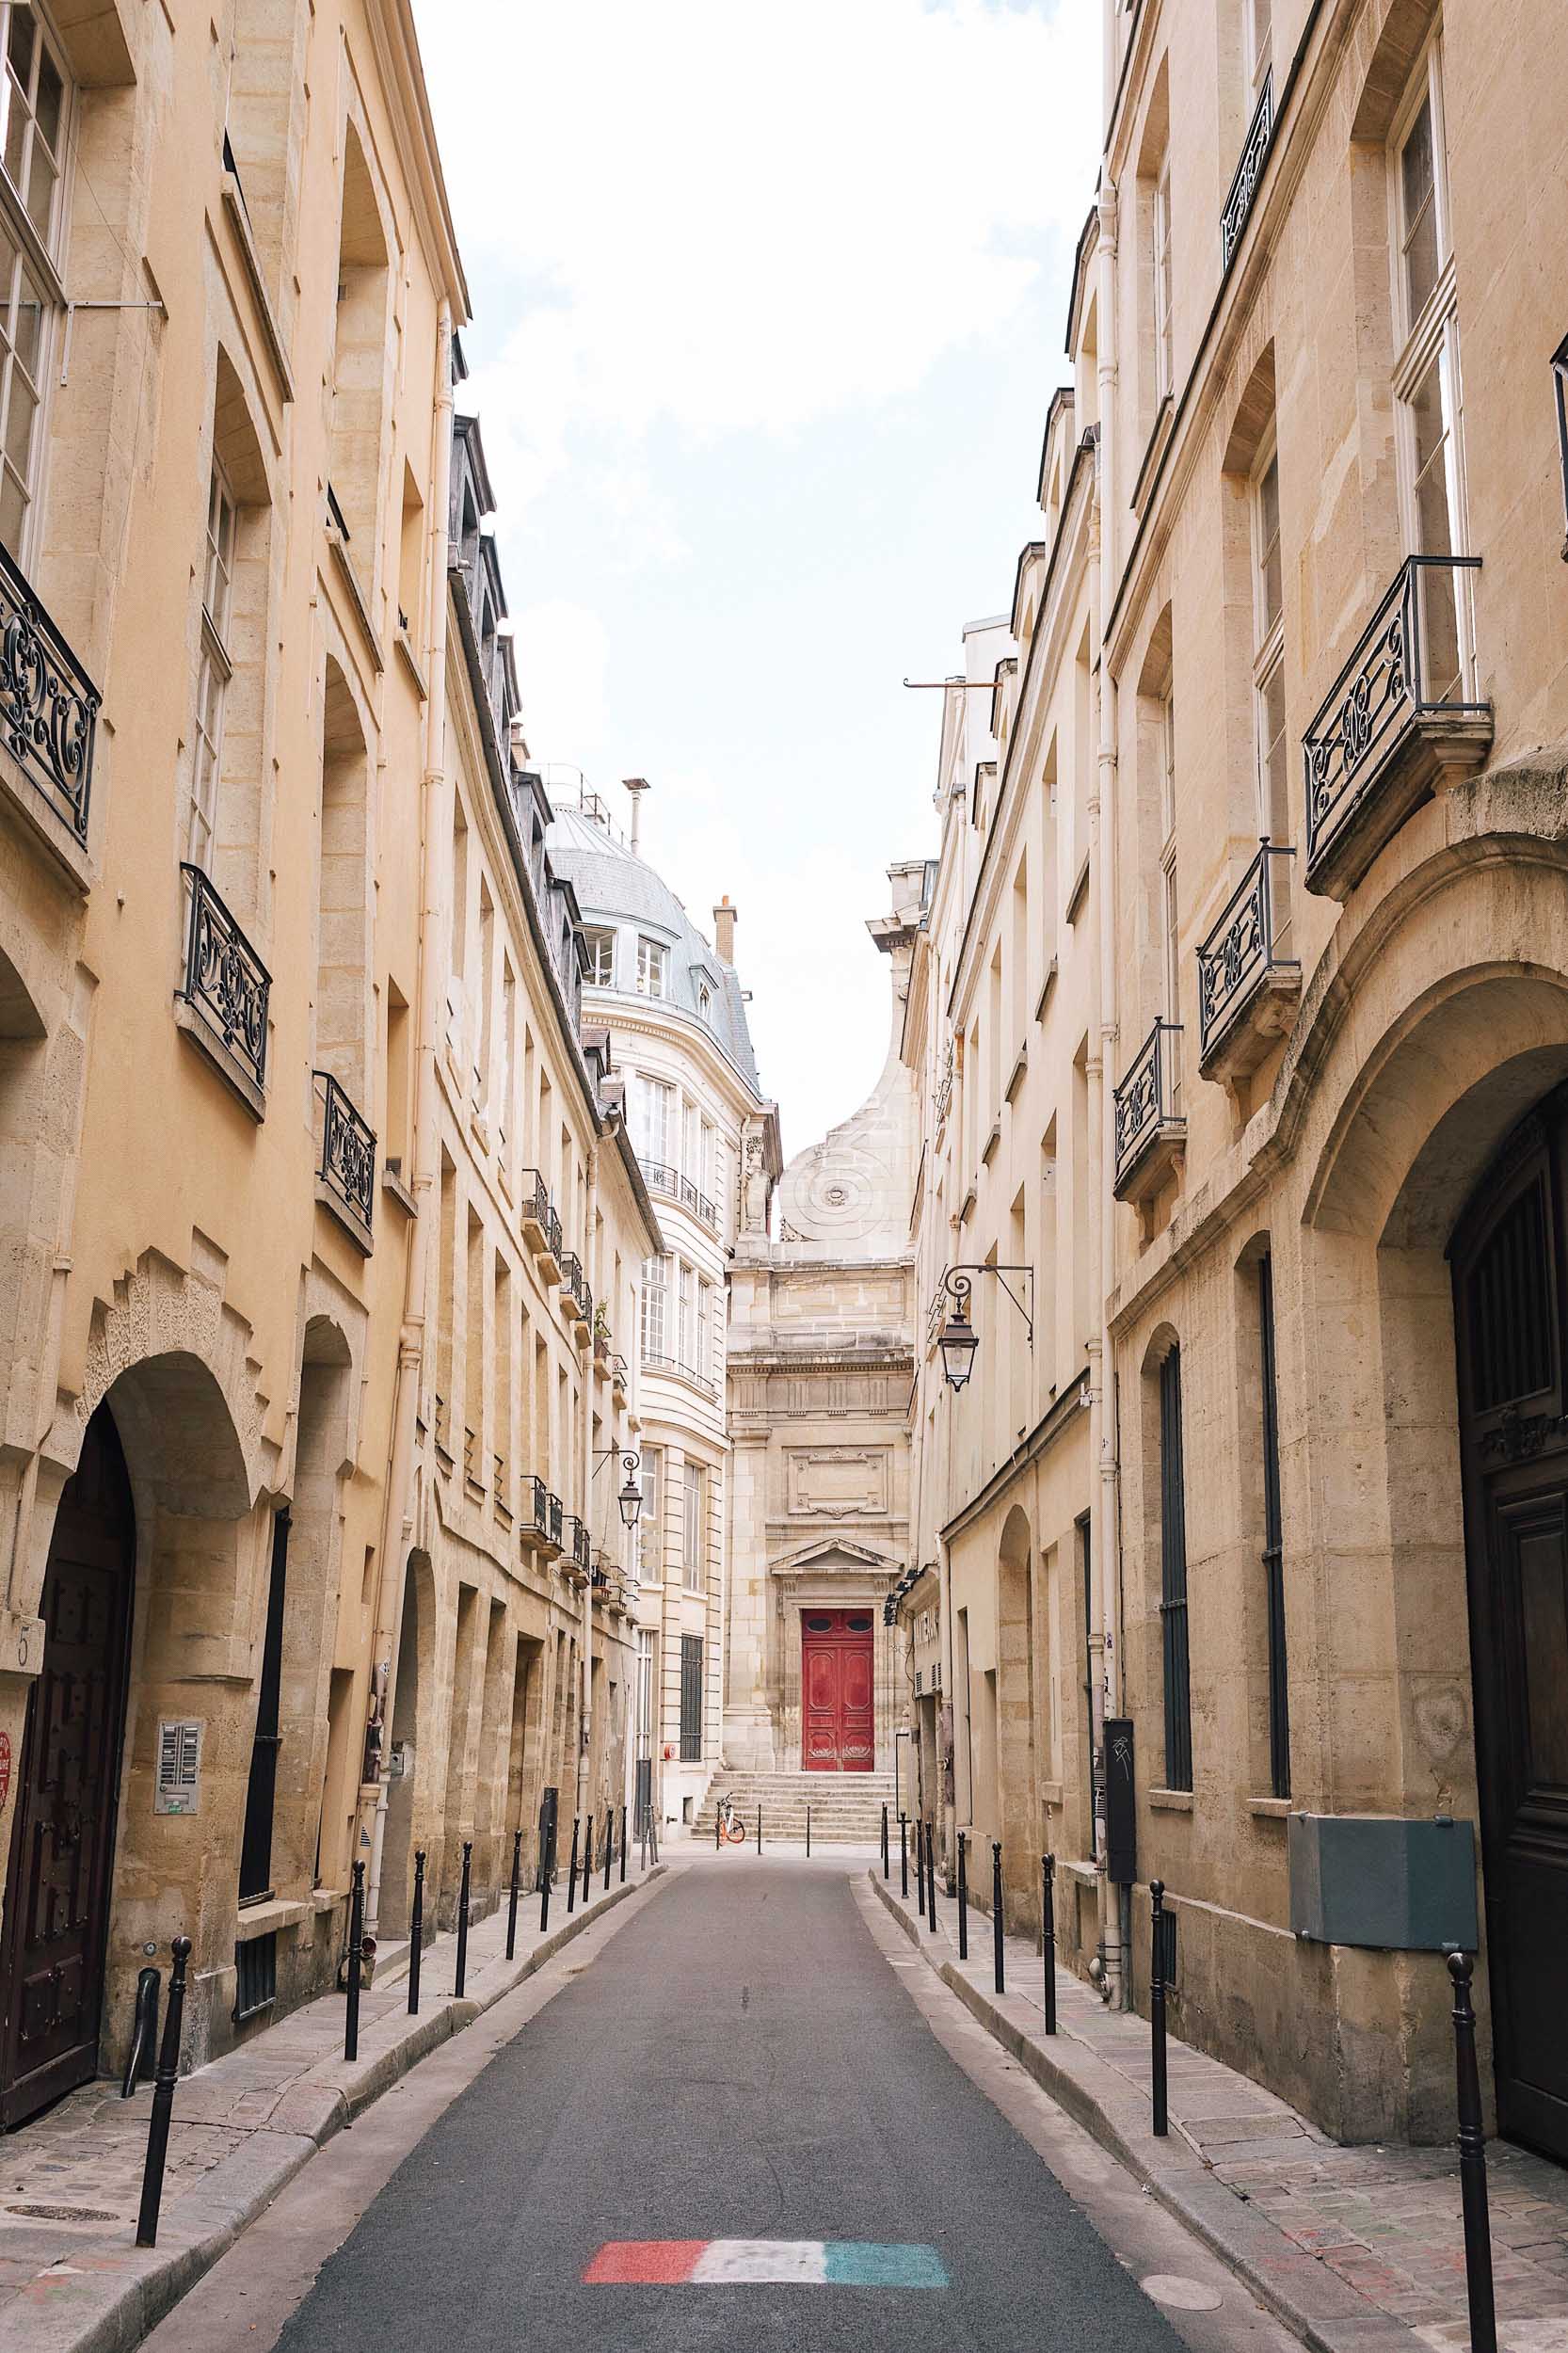 Paris itinerary 5 days - get lost exploring the neighborhood of Le Marais